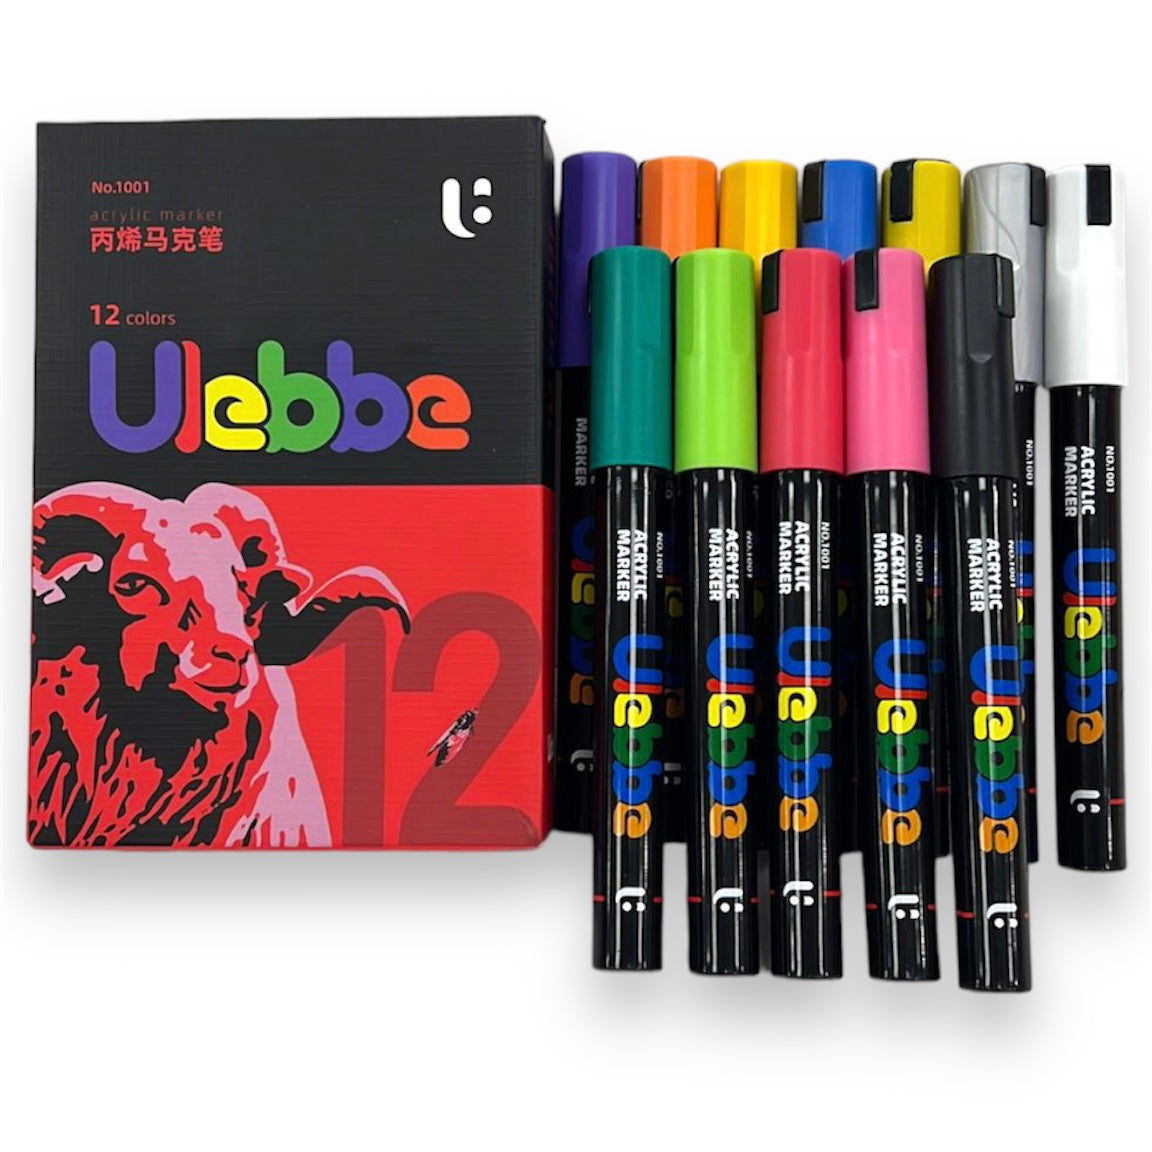 Ulebbe Acrylic Markers 12 Colors || الوان يوليبي اكريليك ماركر ١٢ لون⁩⁩